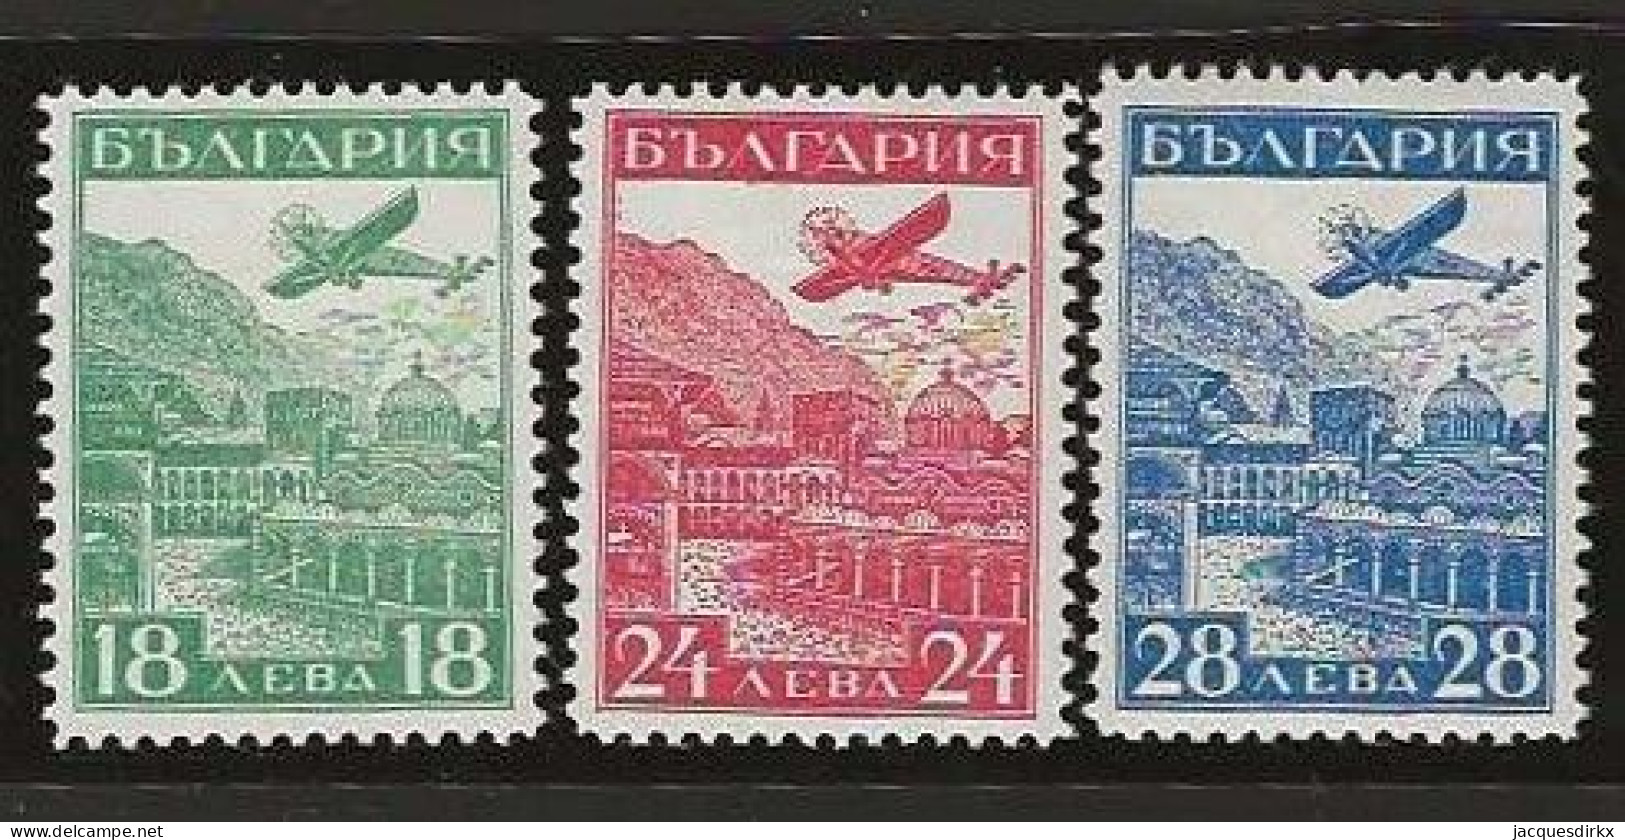 Bulgaria      .  Y&T      .  Airmail  12/14        .   *      .     Mint-hinged - Corréo Aéreo